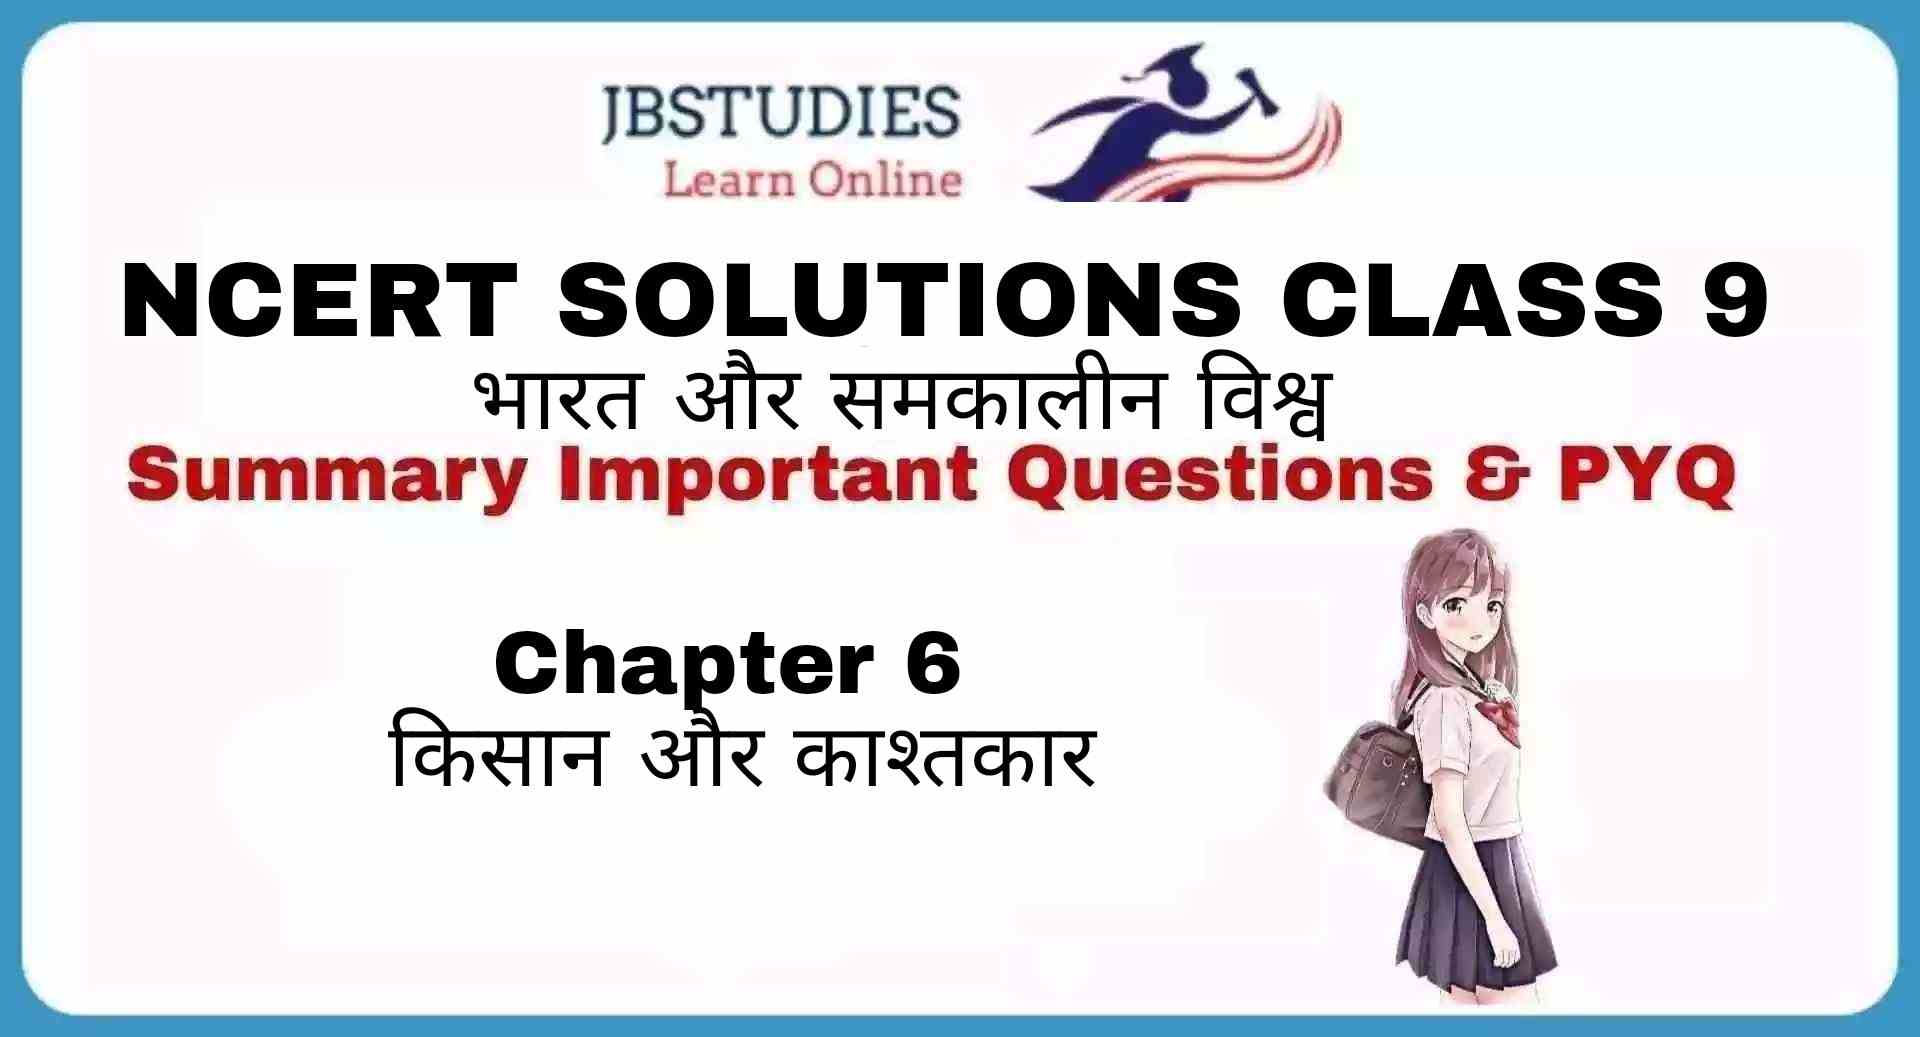 Solutions Class 9 भारत और समकालीन विश्व - I Chapter-6 (किसान और काश्तकार)